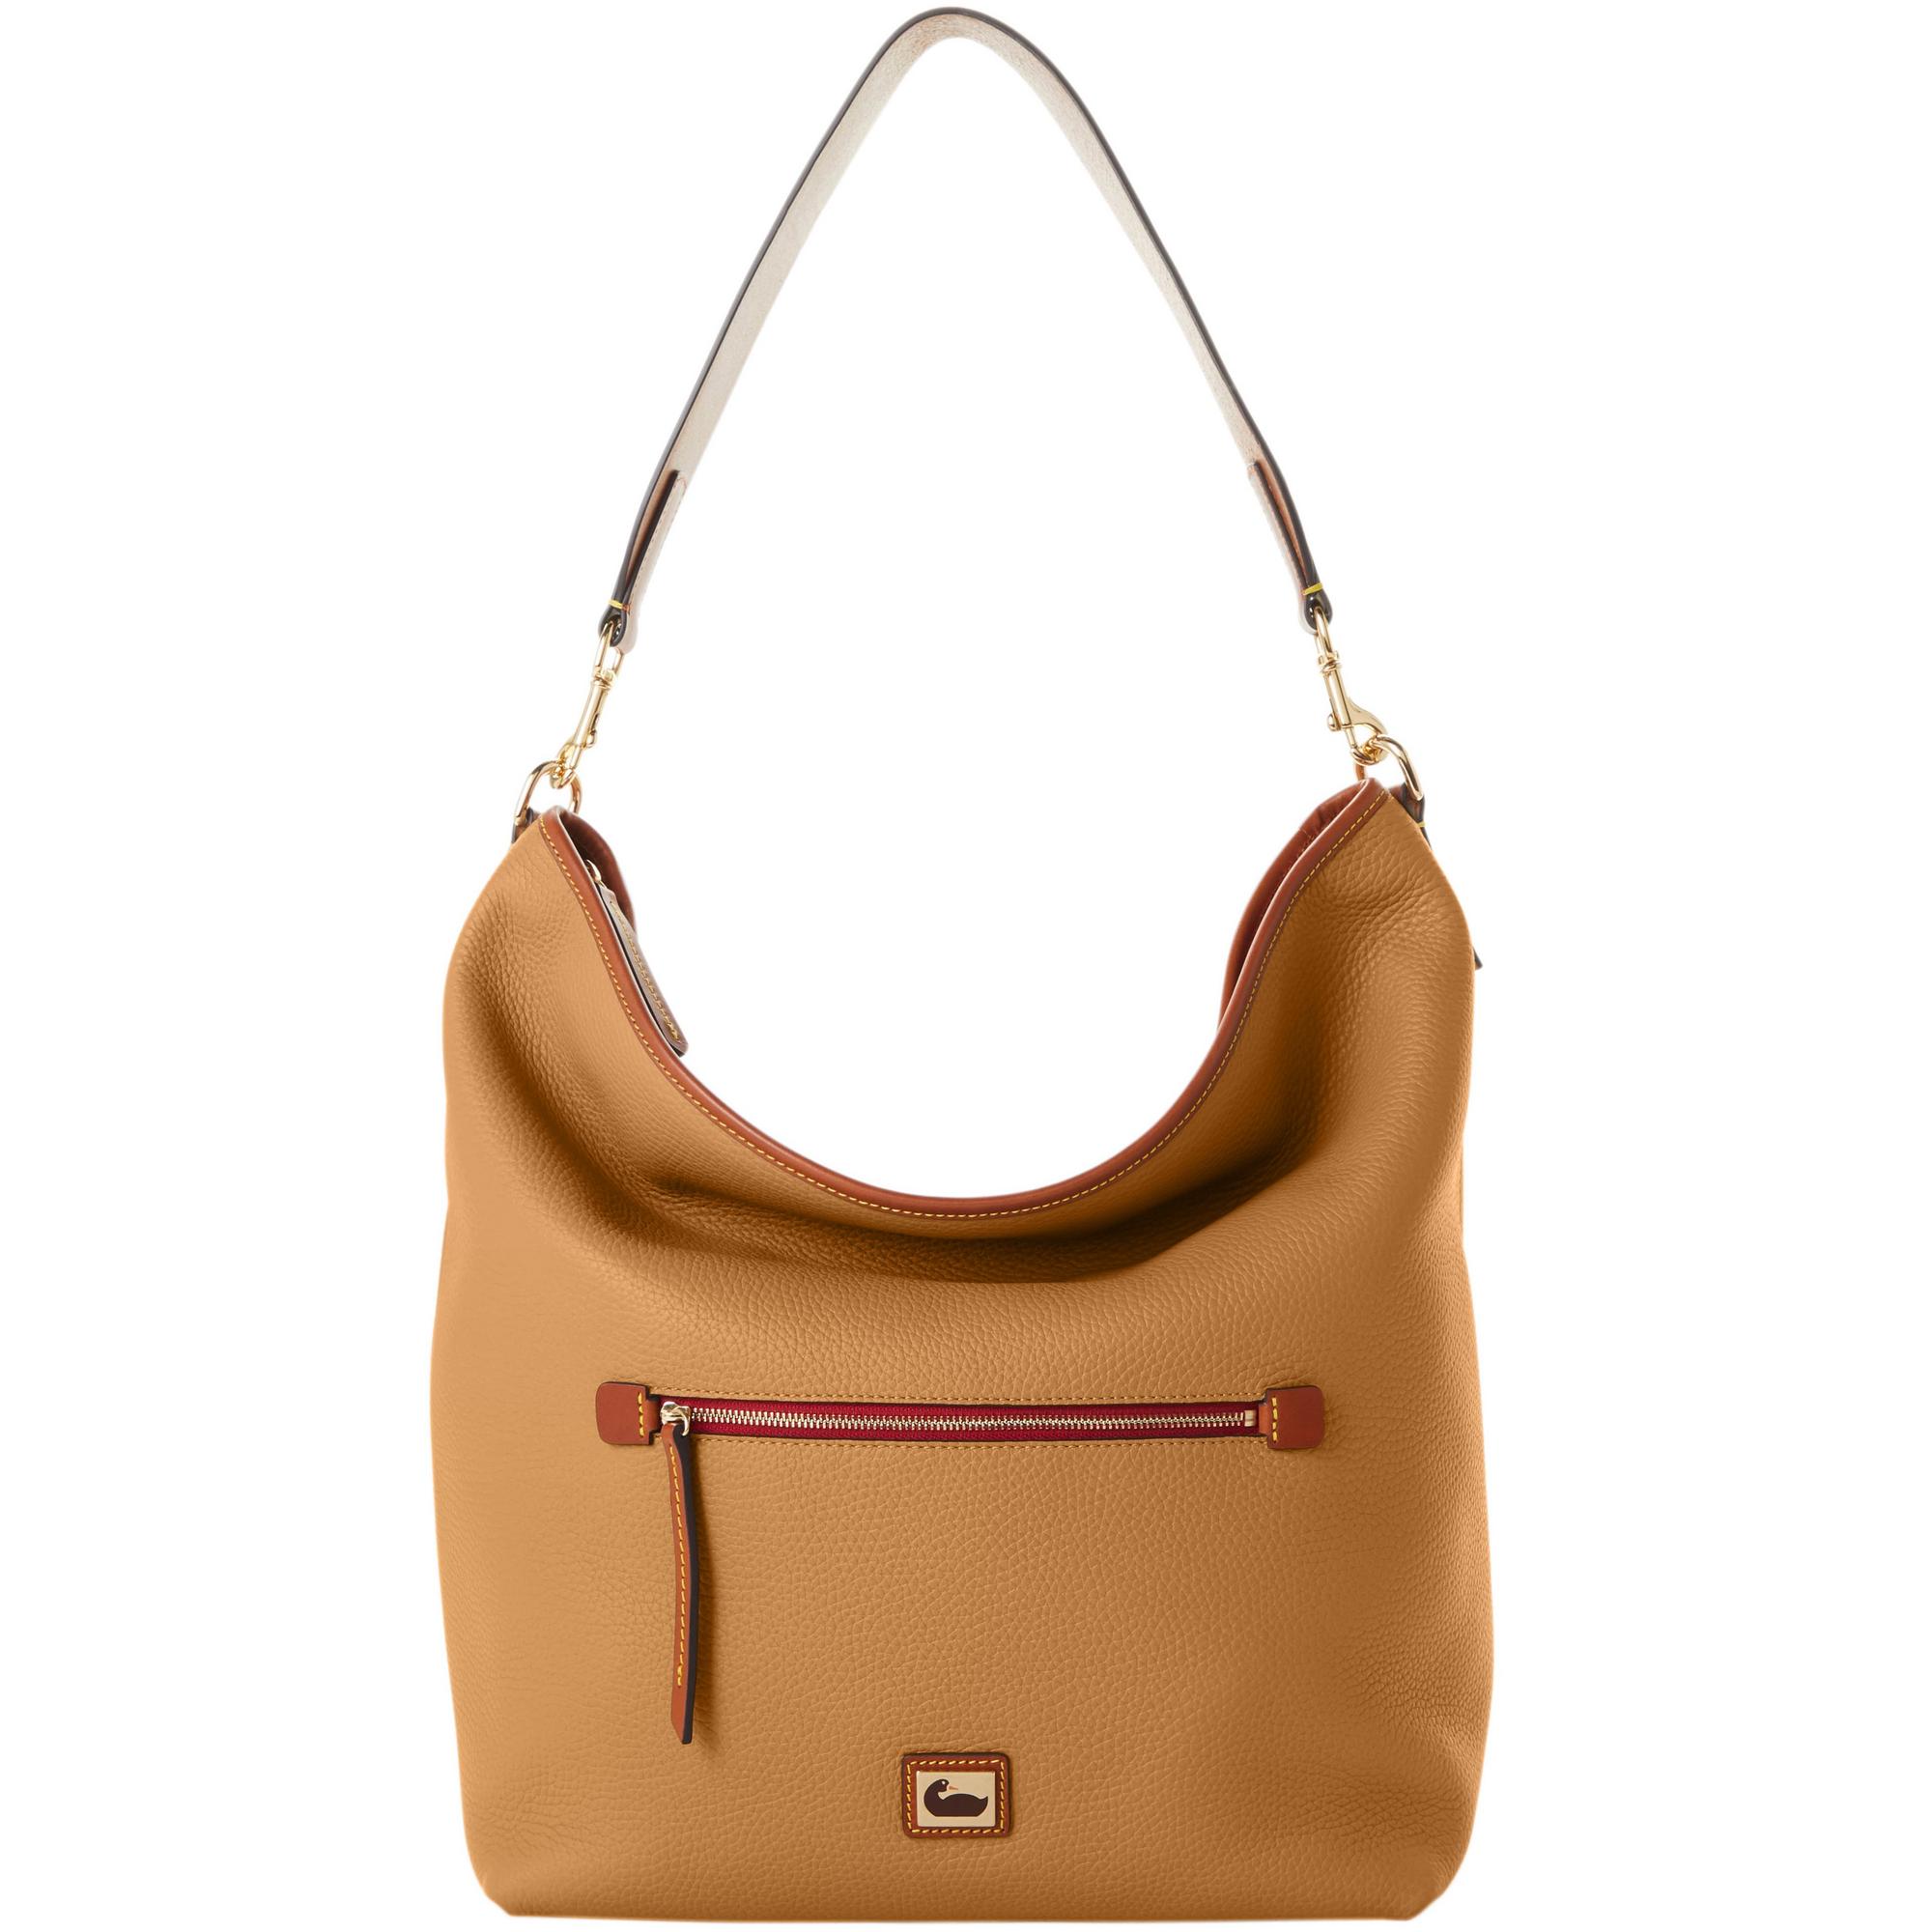 Dooney & Bourke Sale: Take Up to 50% Off Select Handbags - irideat